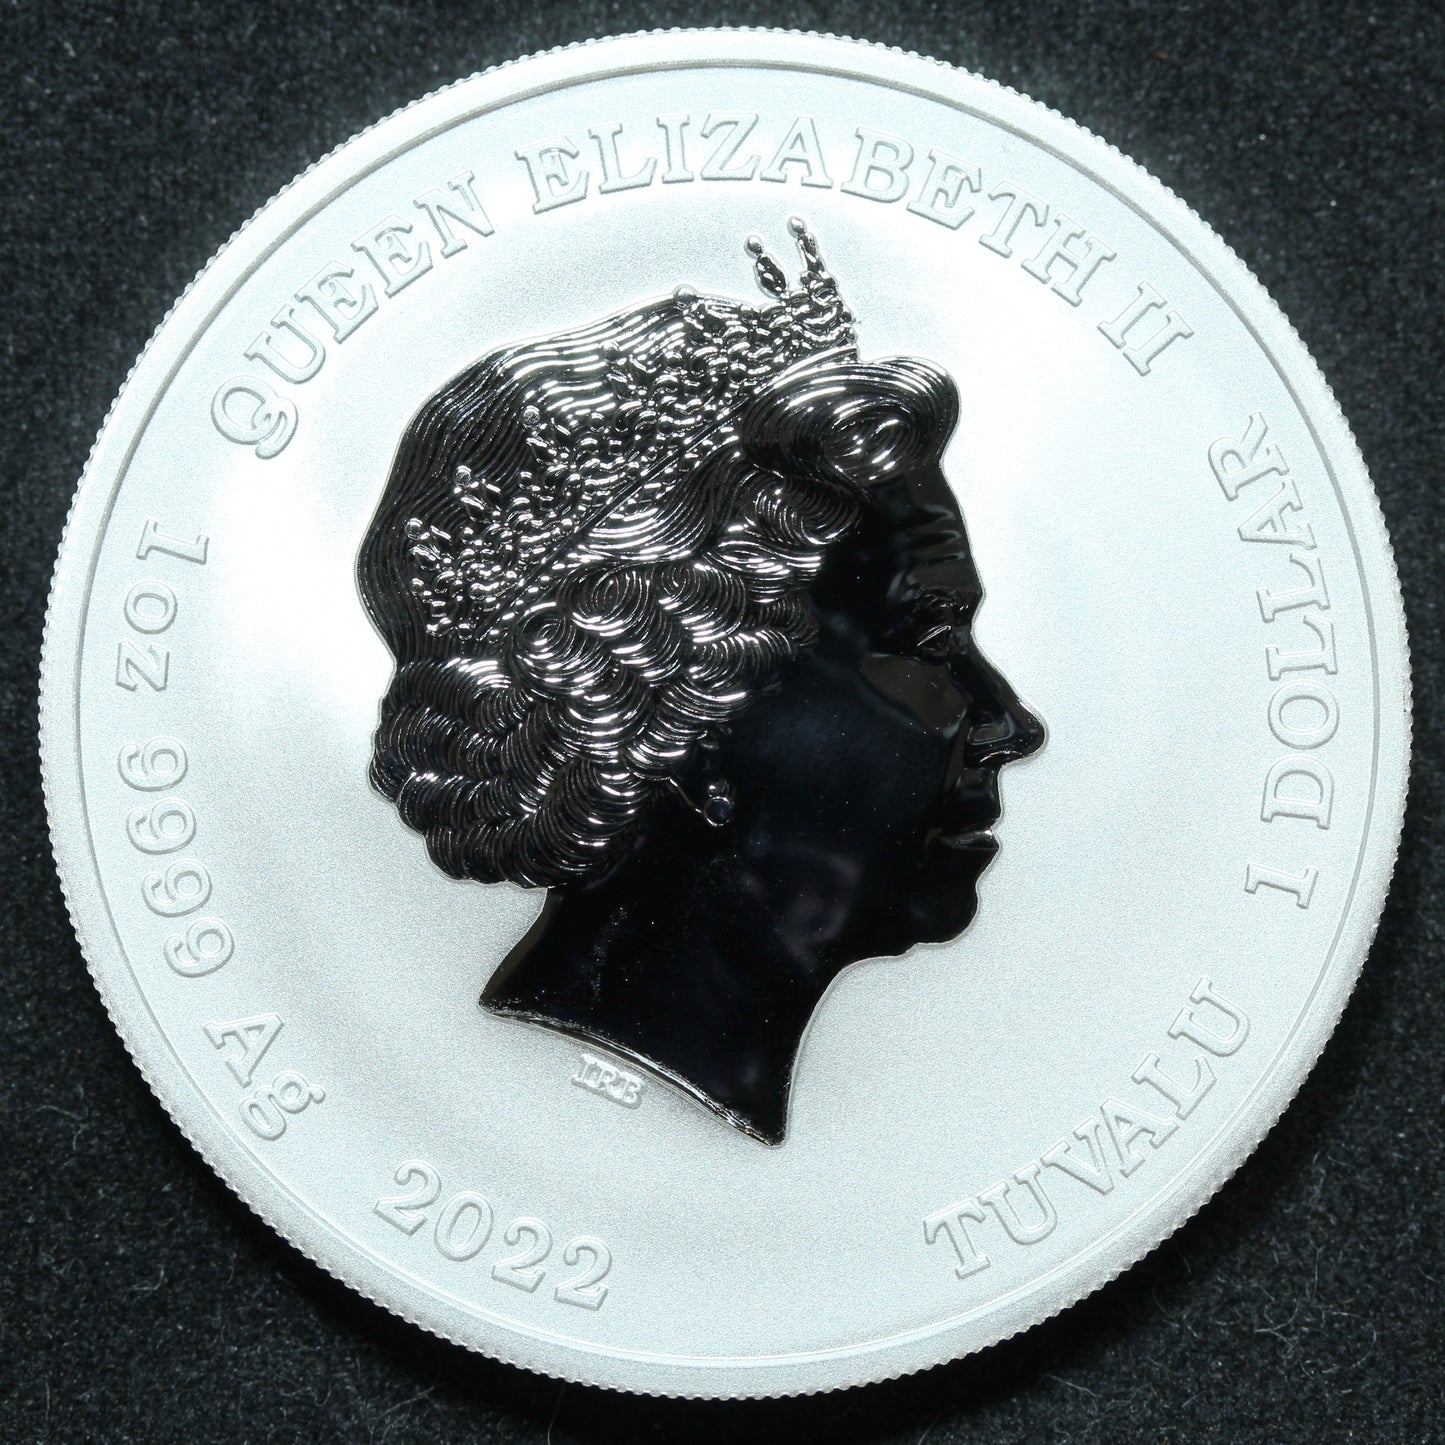 2022 Tuvalu 007 James Bond One Dollar $1 Silver Round Coin w/ Capsule